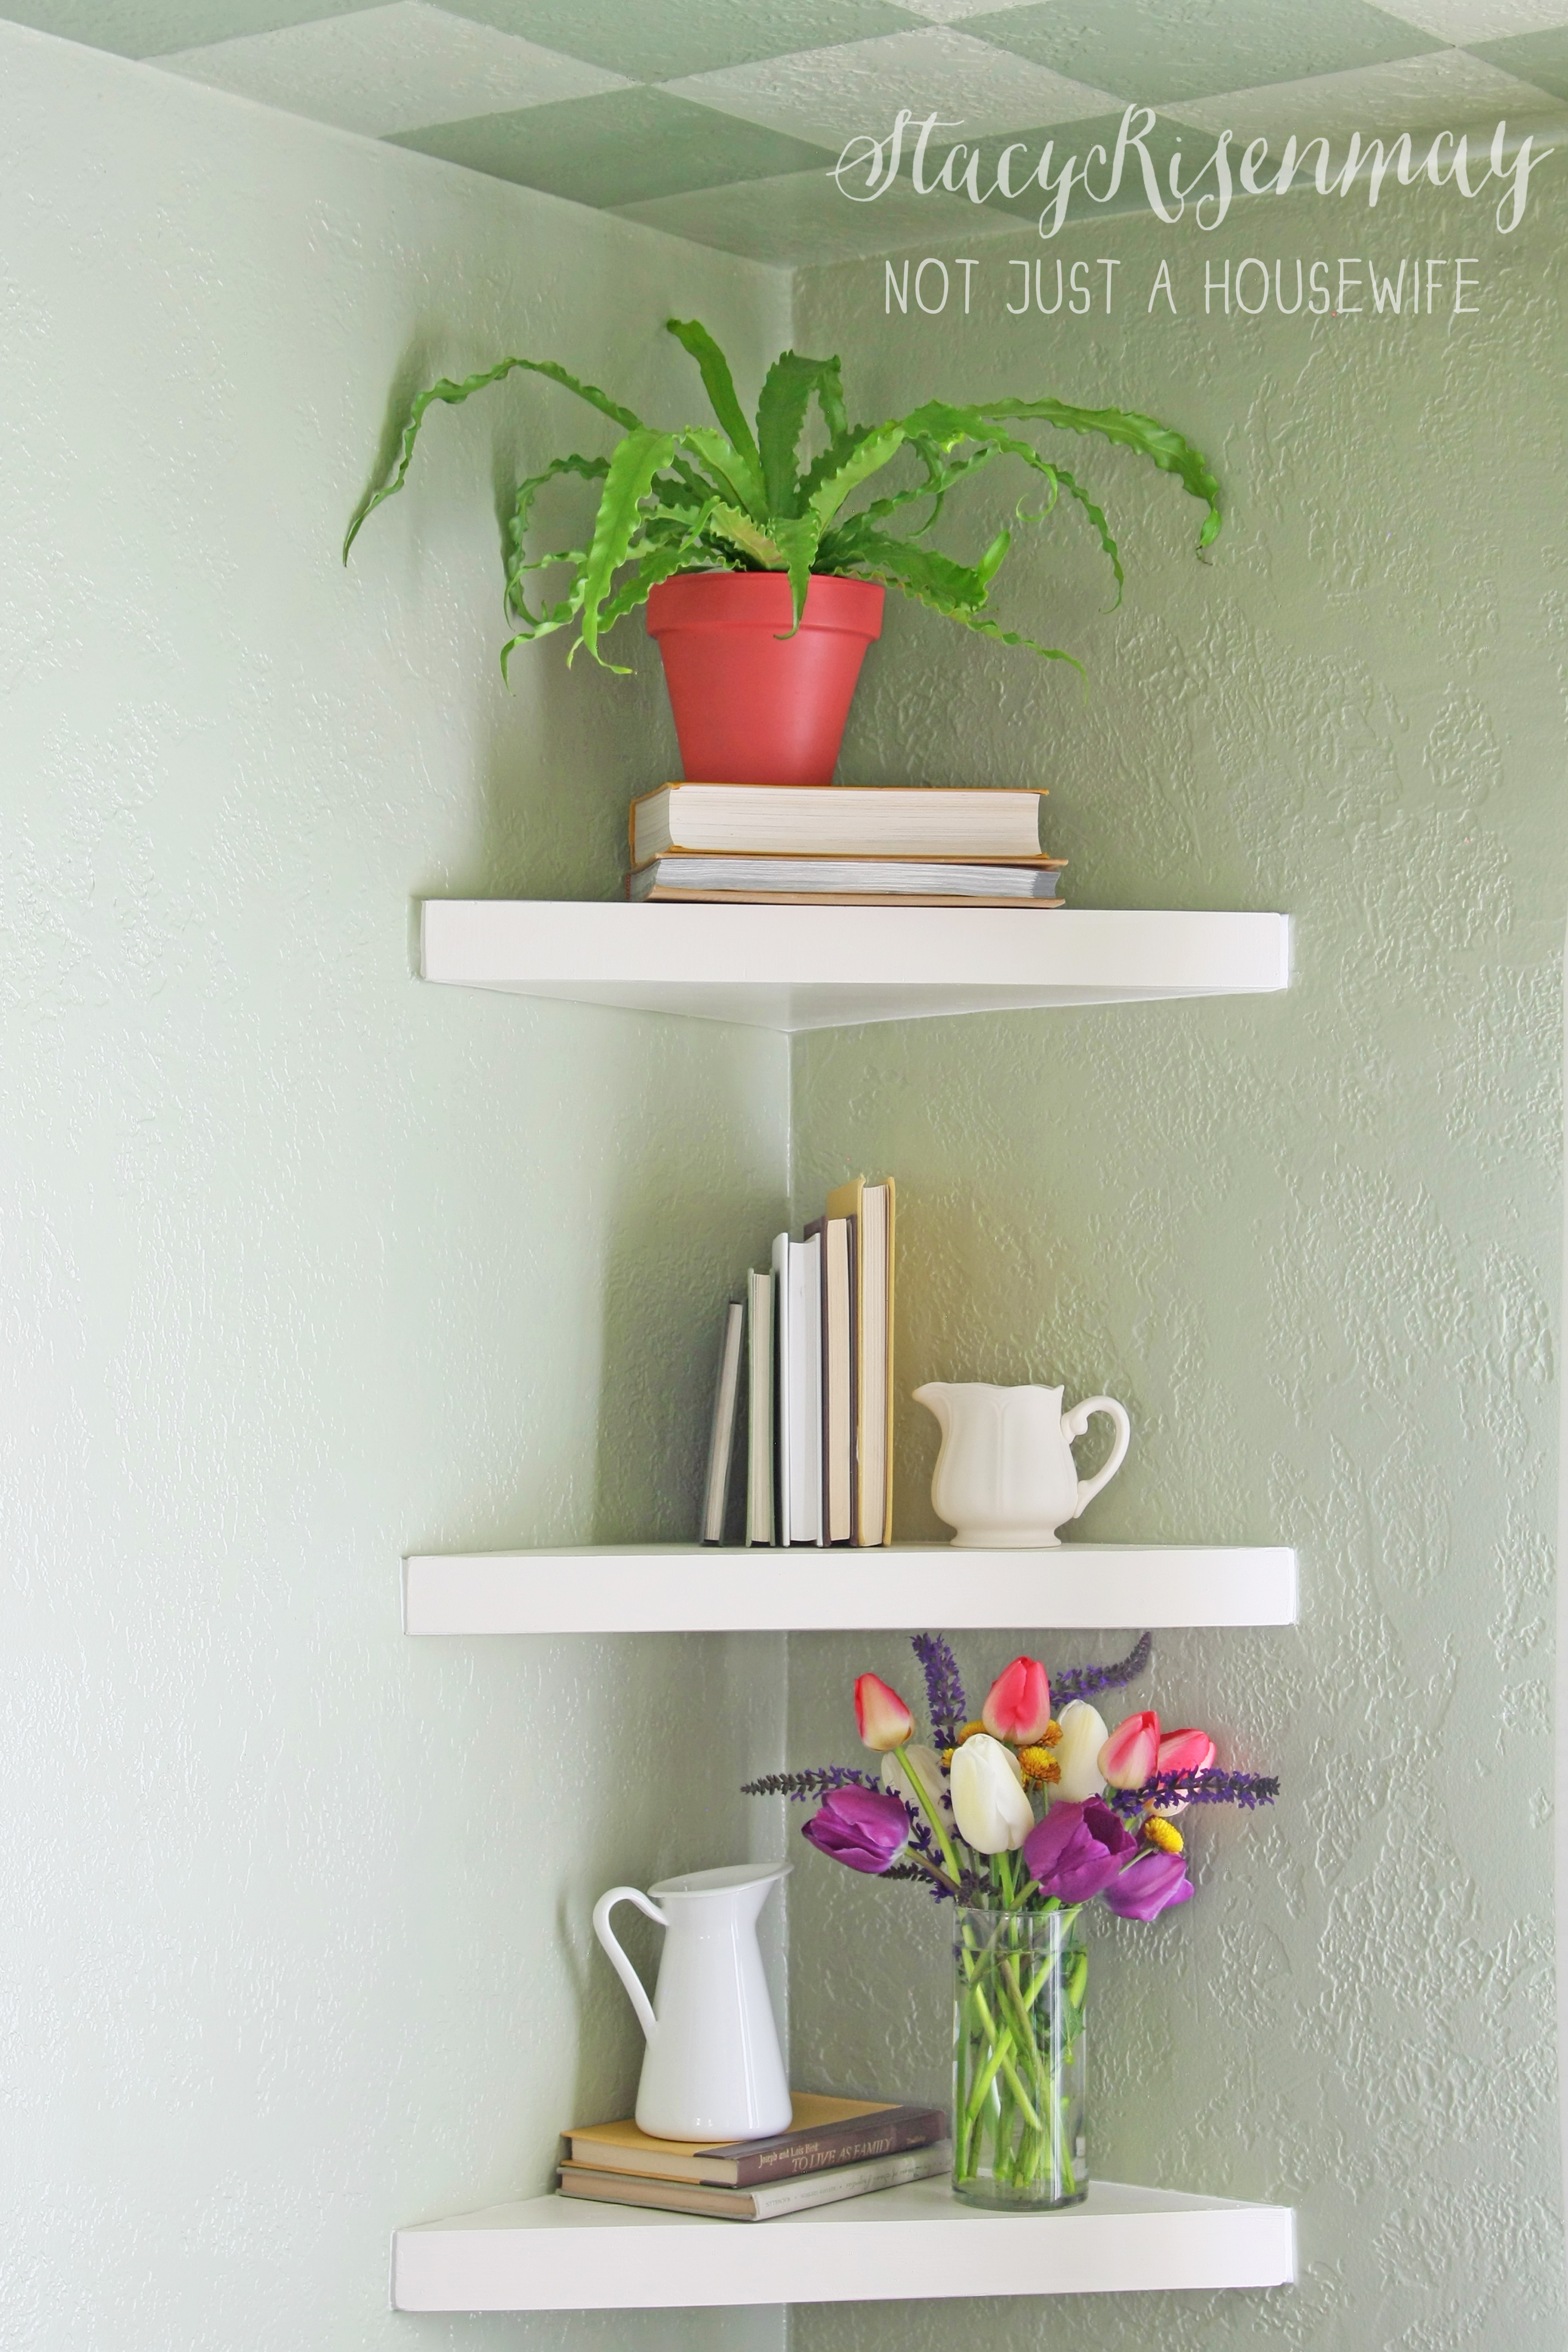 Best ideas about DIY Corner Shelves
. Save or Pin Floating Corner Shelves Now.